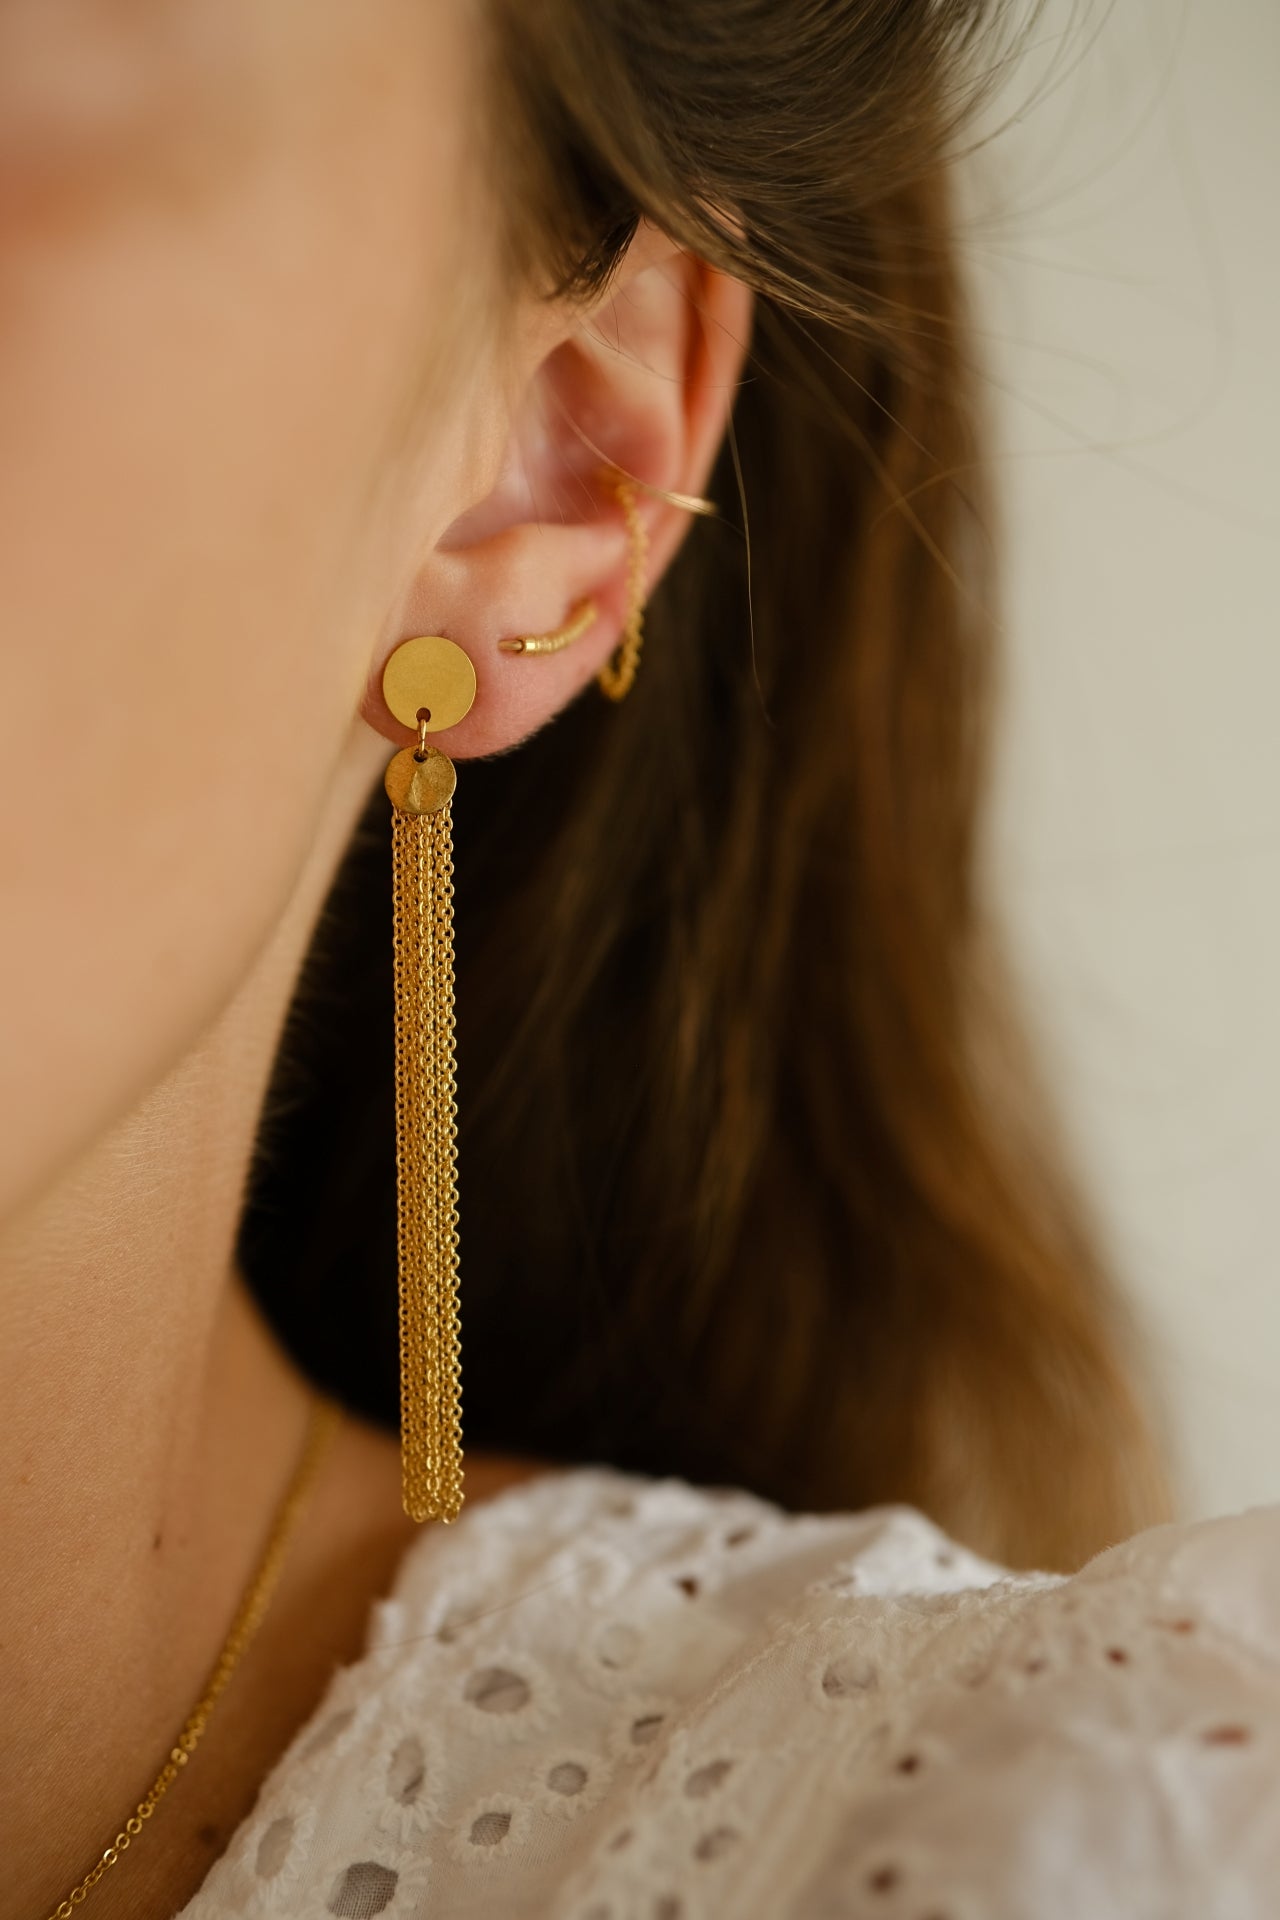 “Strong” earrings